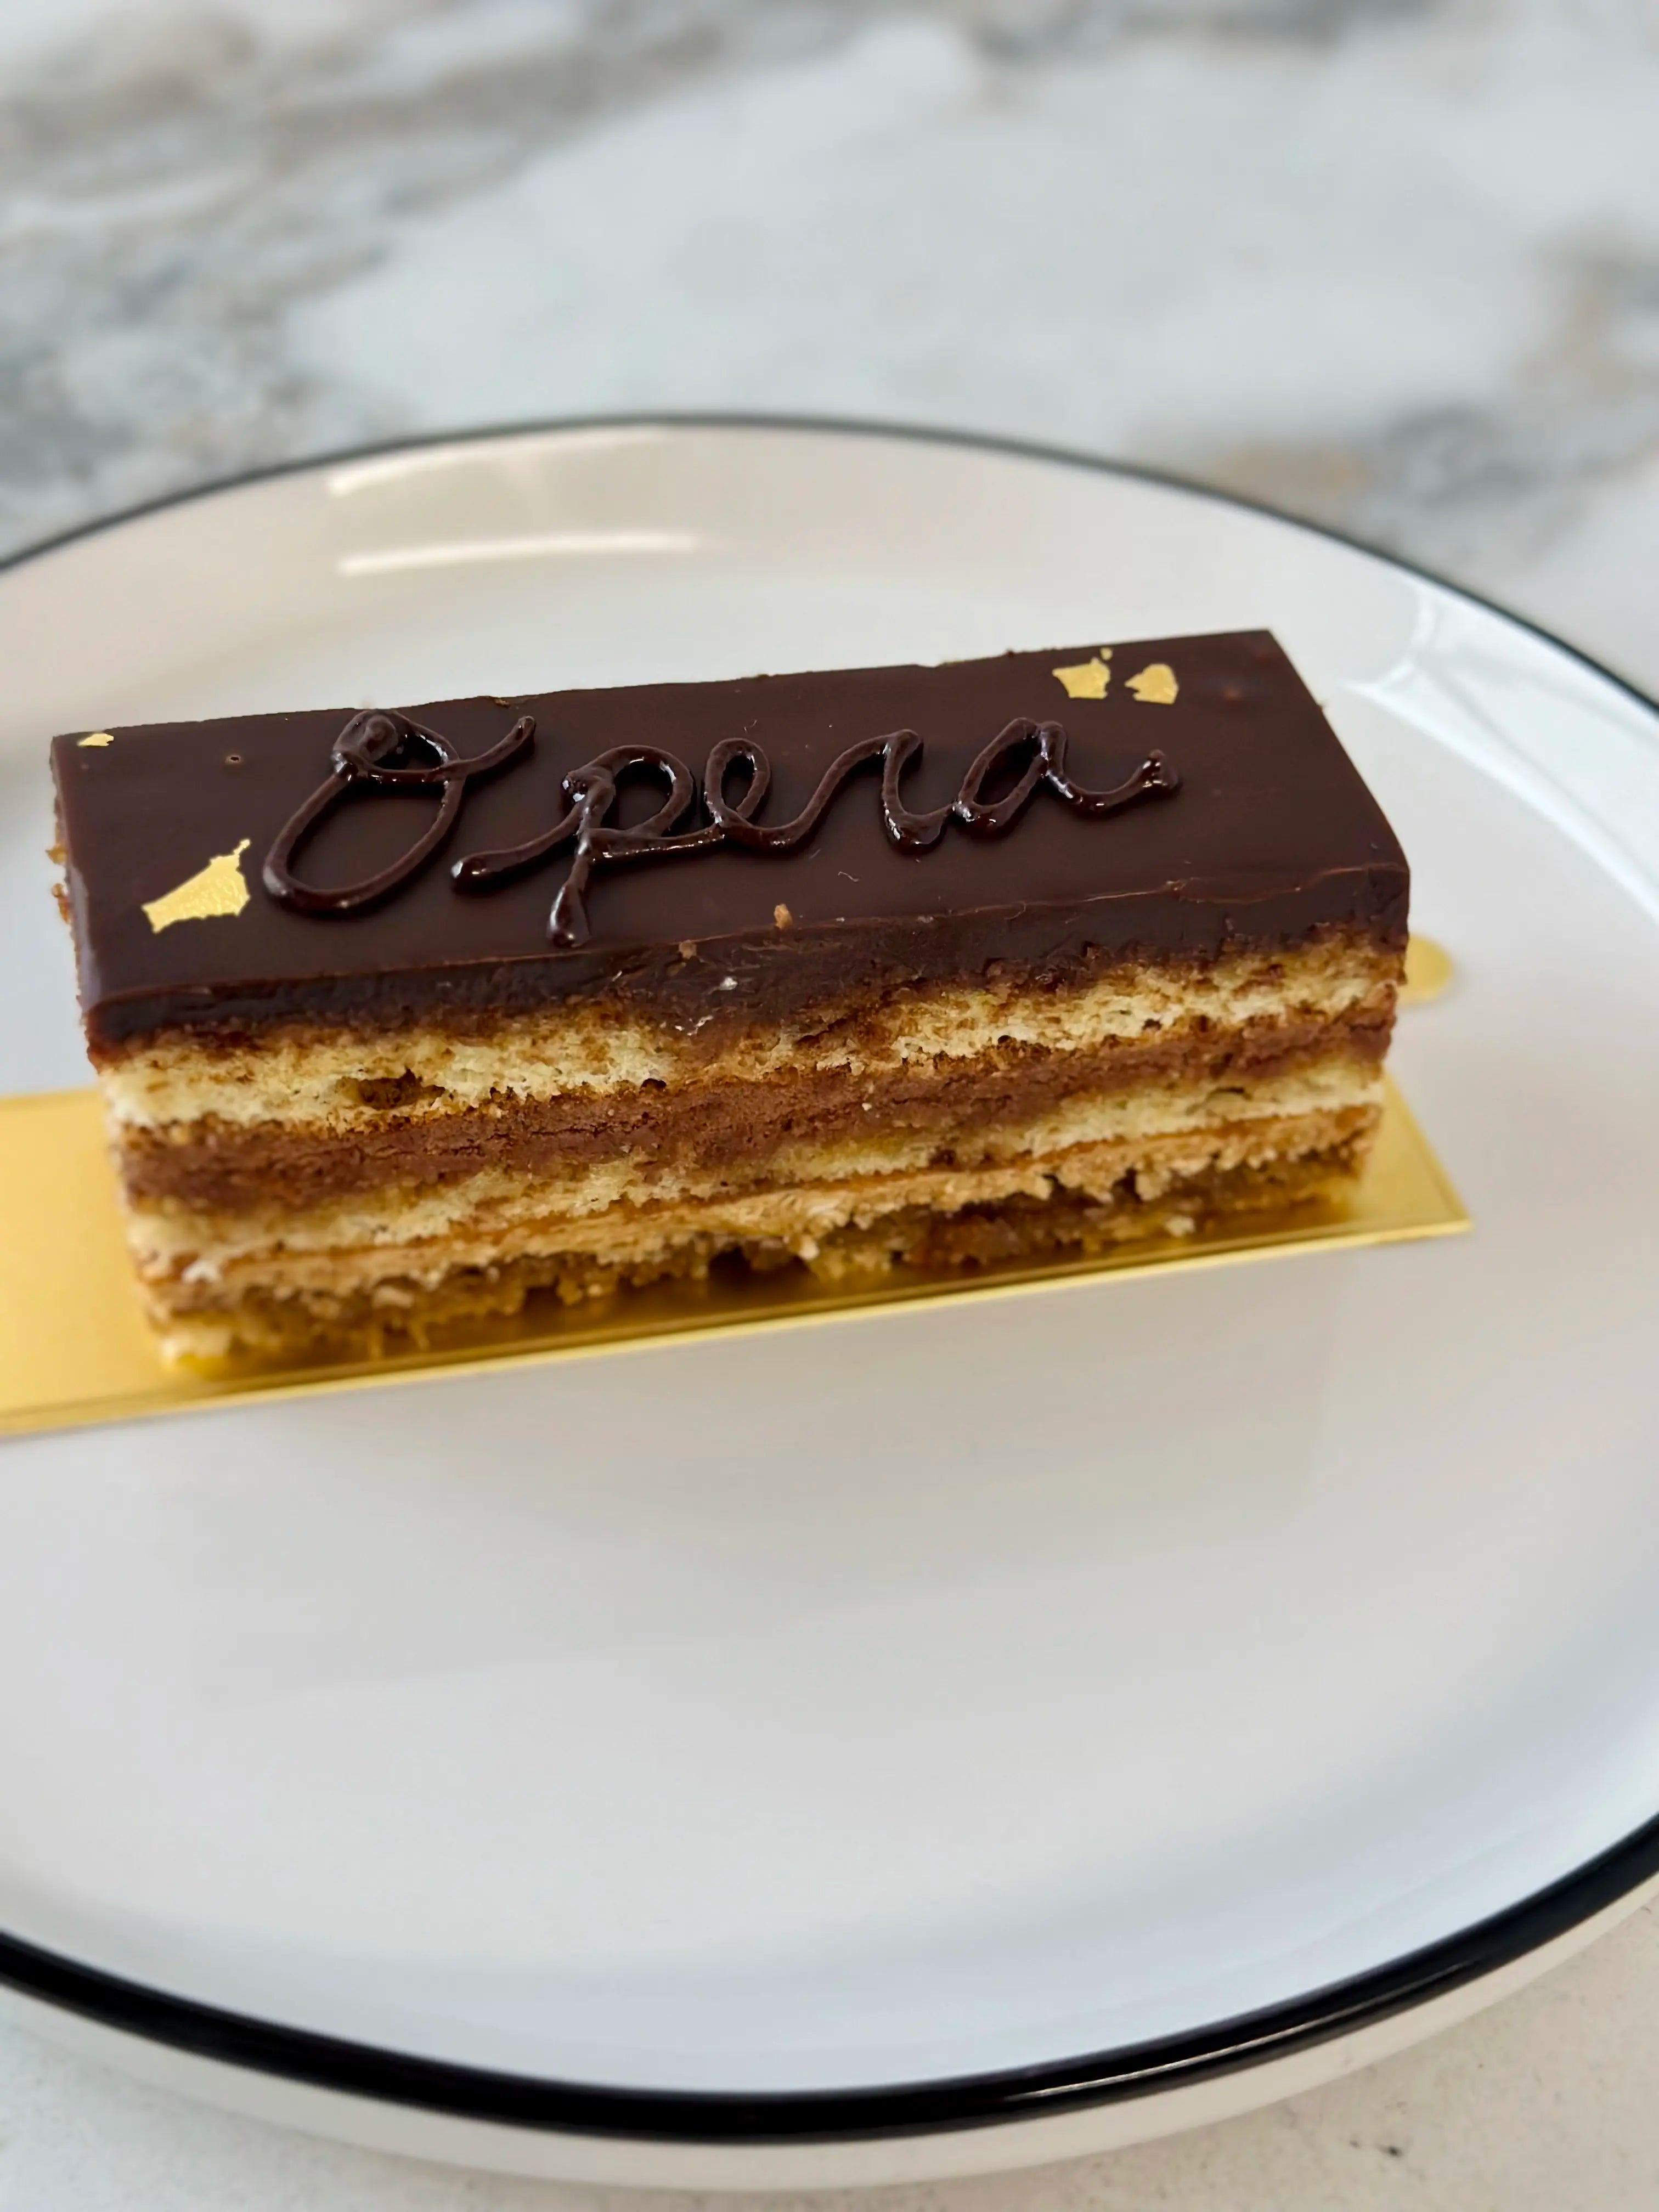 Homemade] French opera cake, just because : r/Baking